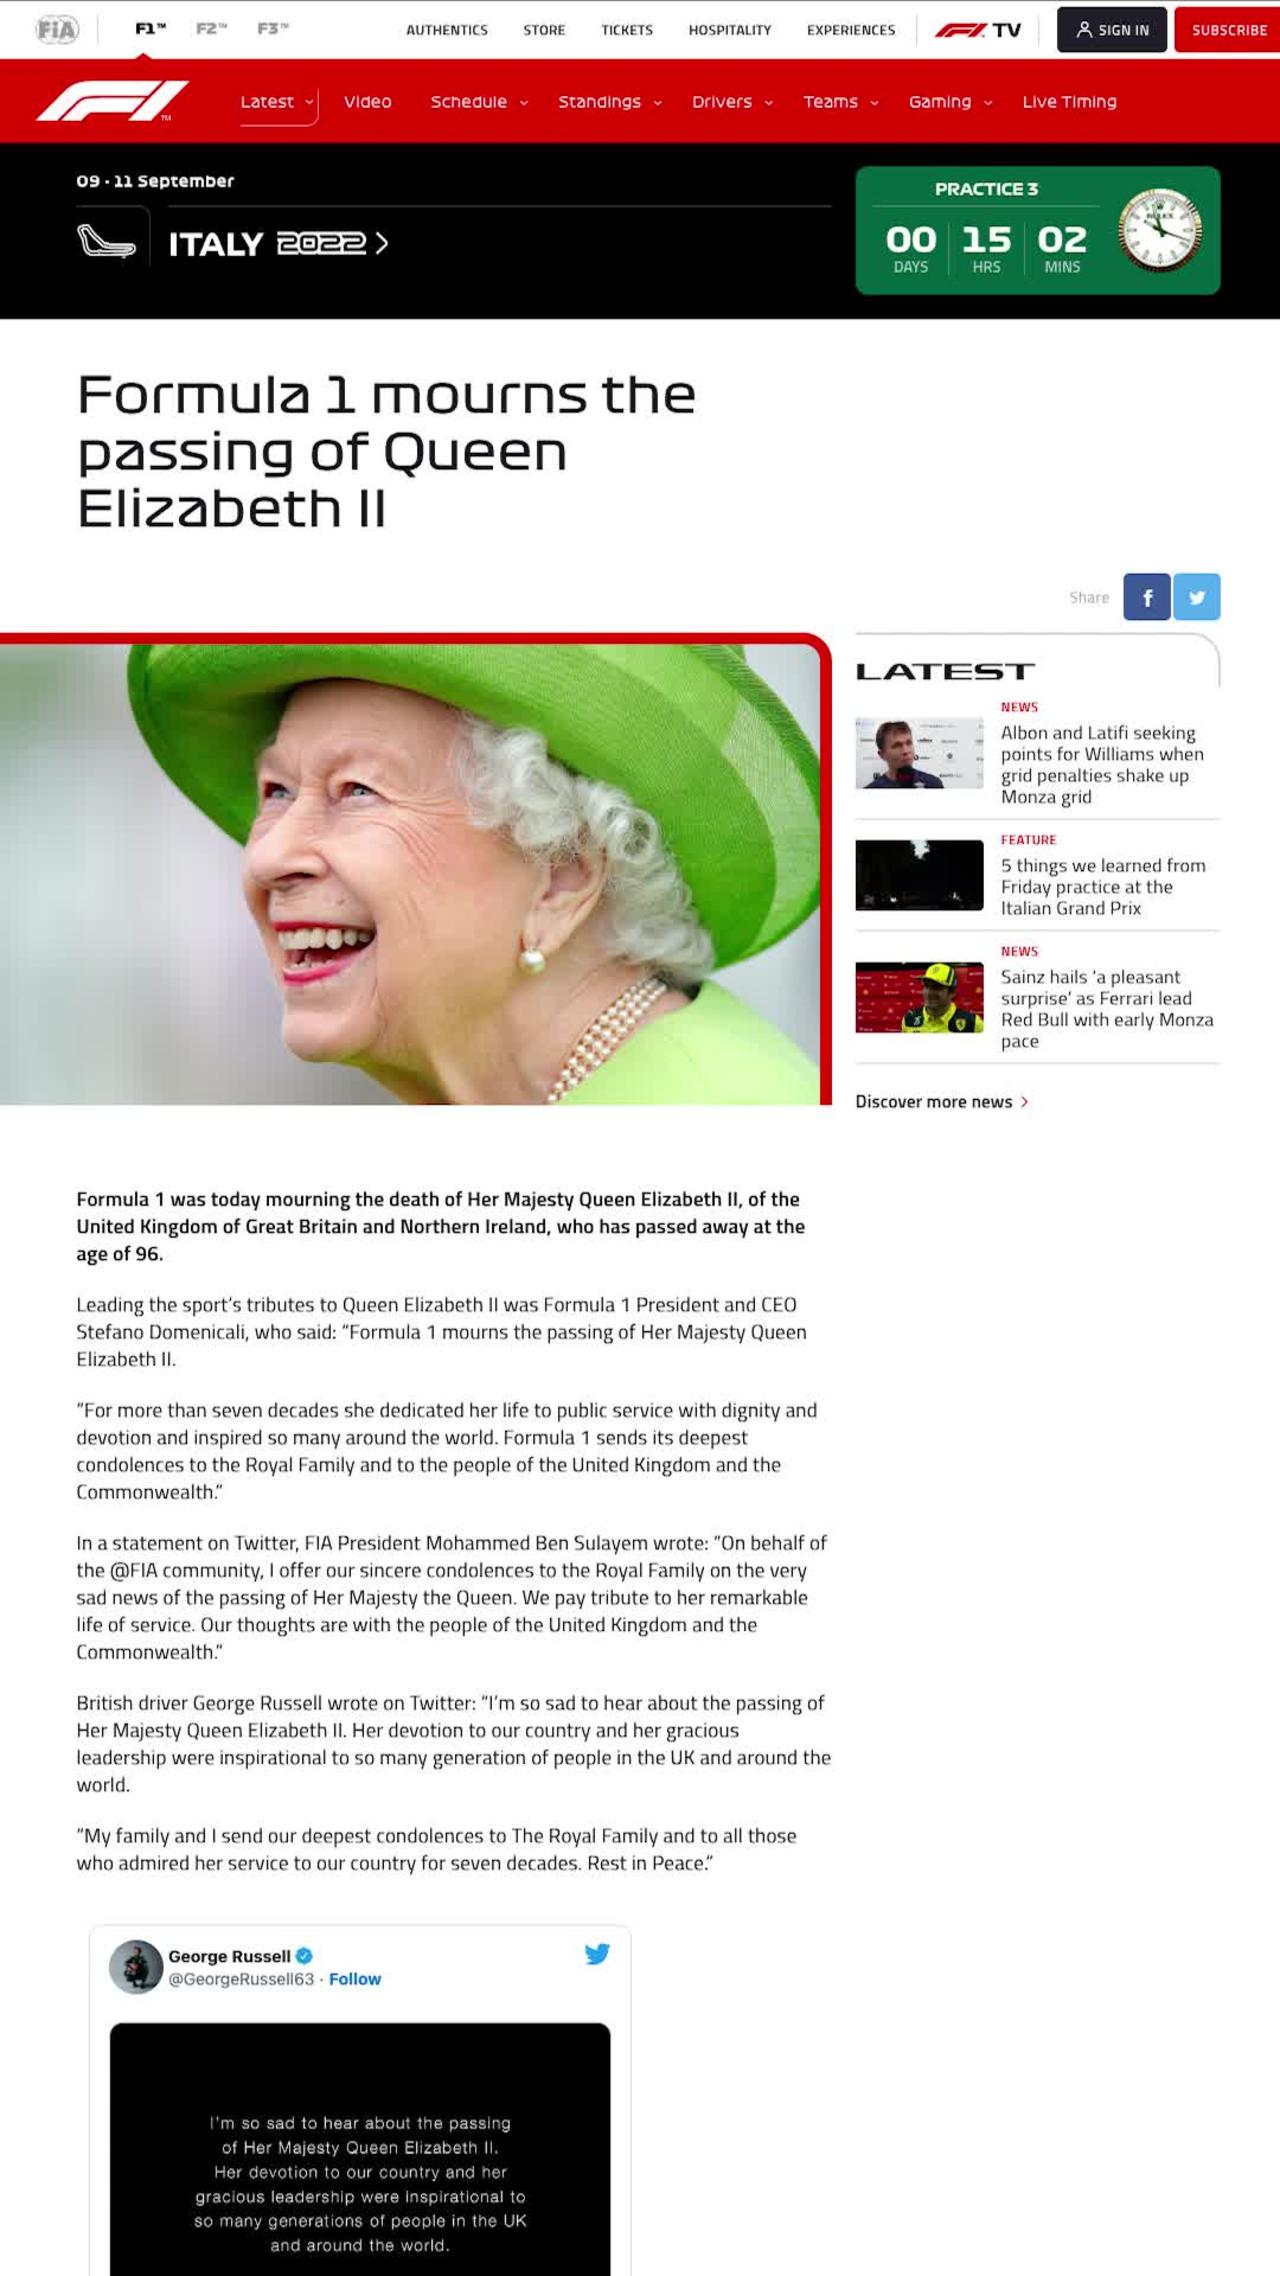 Queen Elizabeth II Dies. So What?